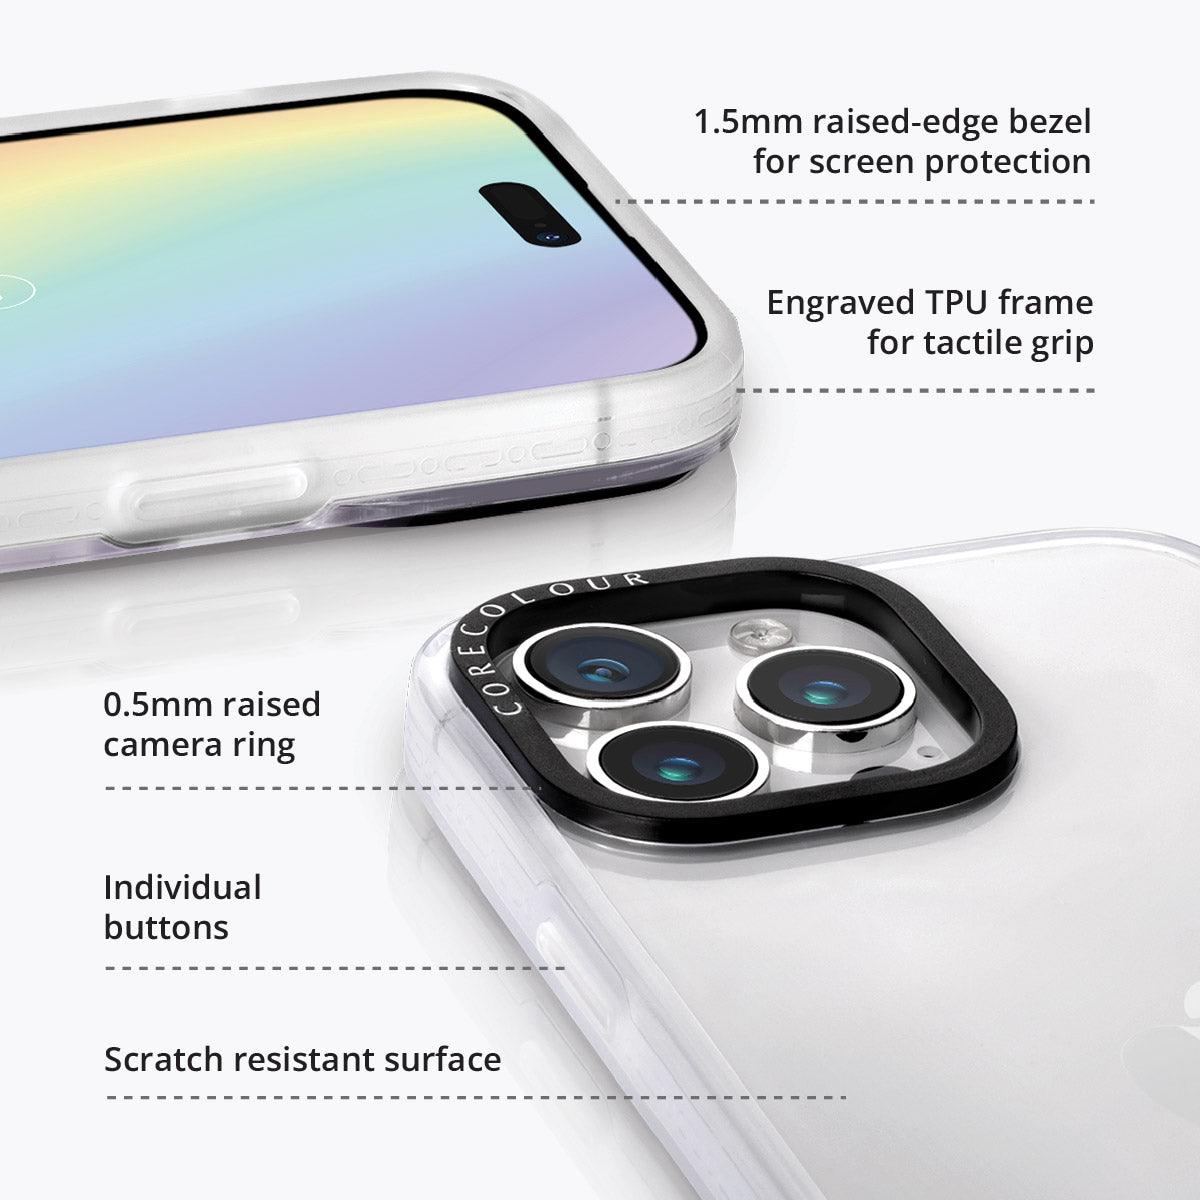 iPhone 13 Pro Pug Minimal Line Phone Case - CORECOLOUR